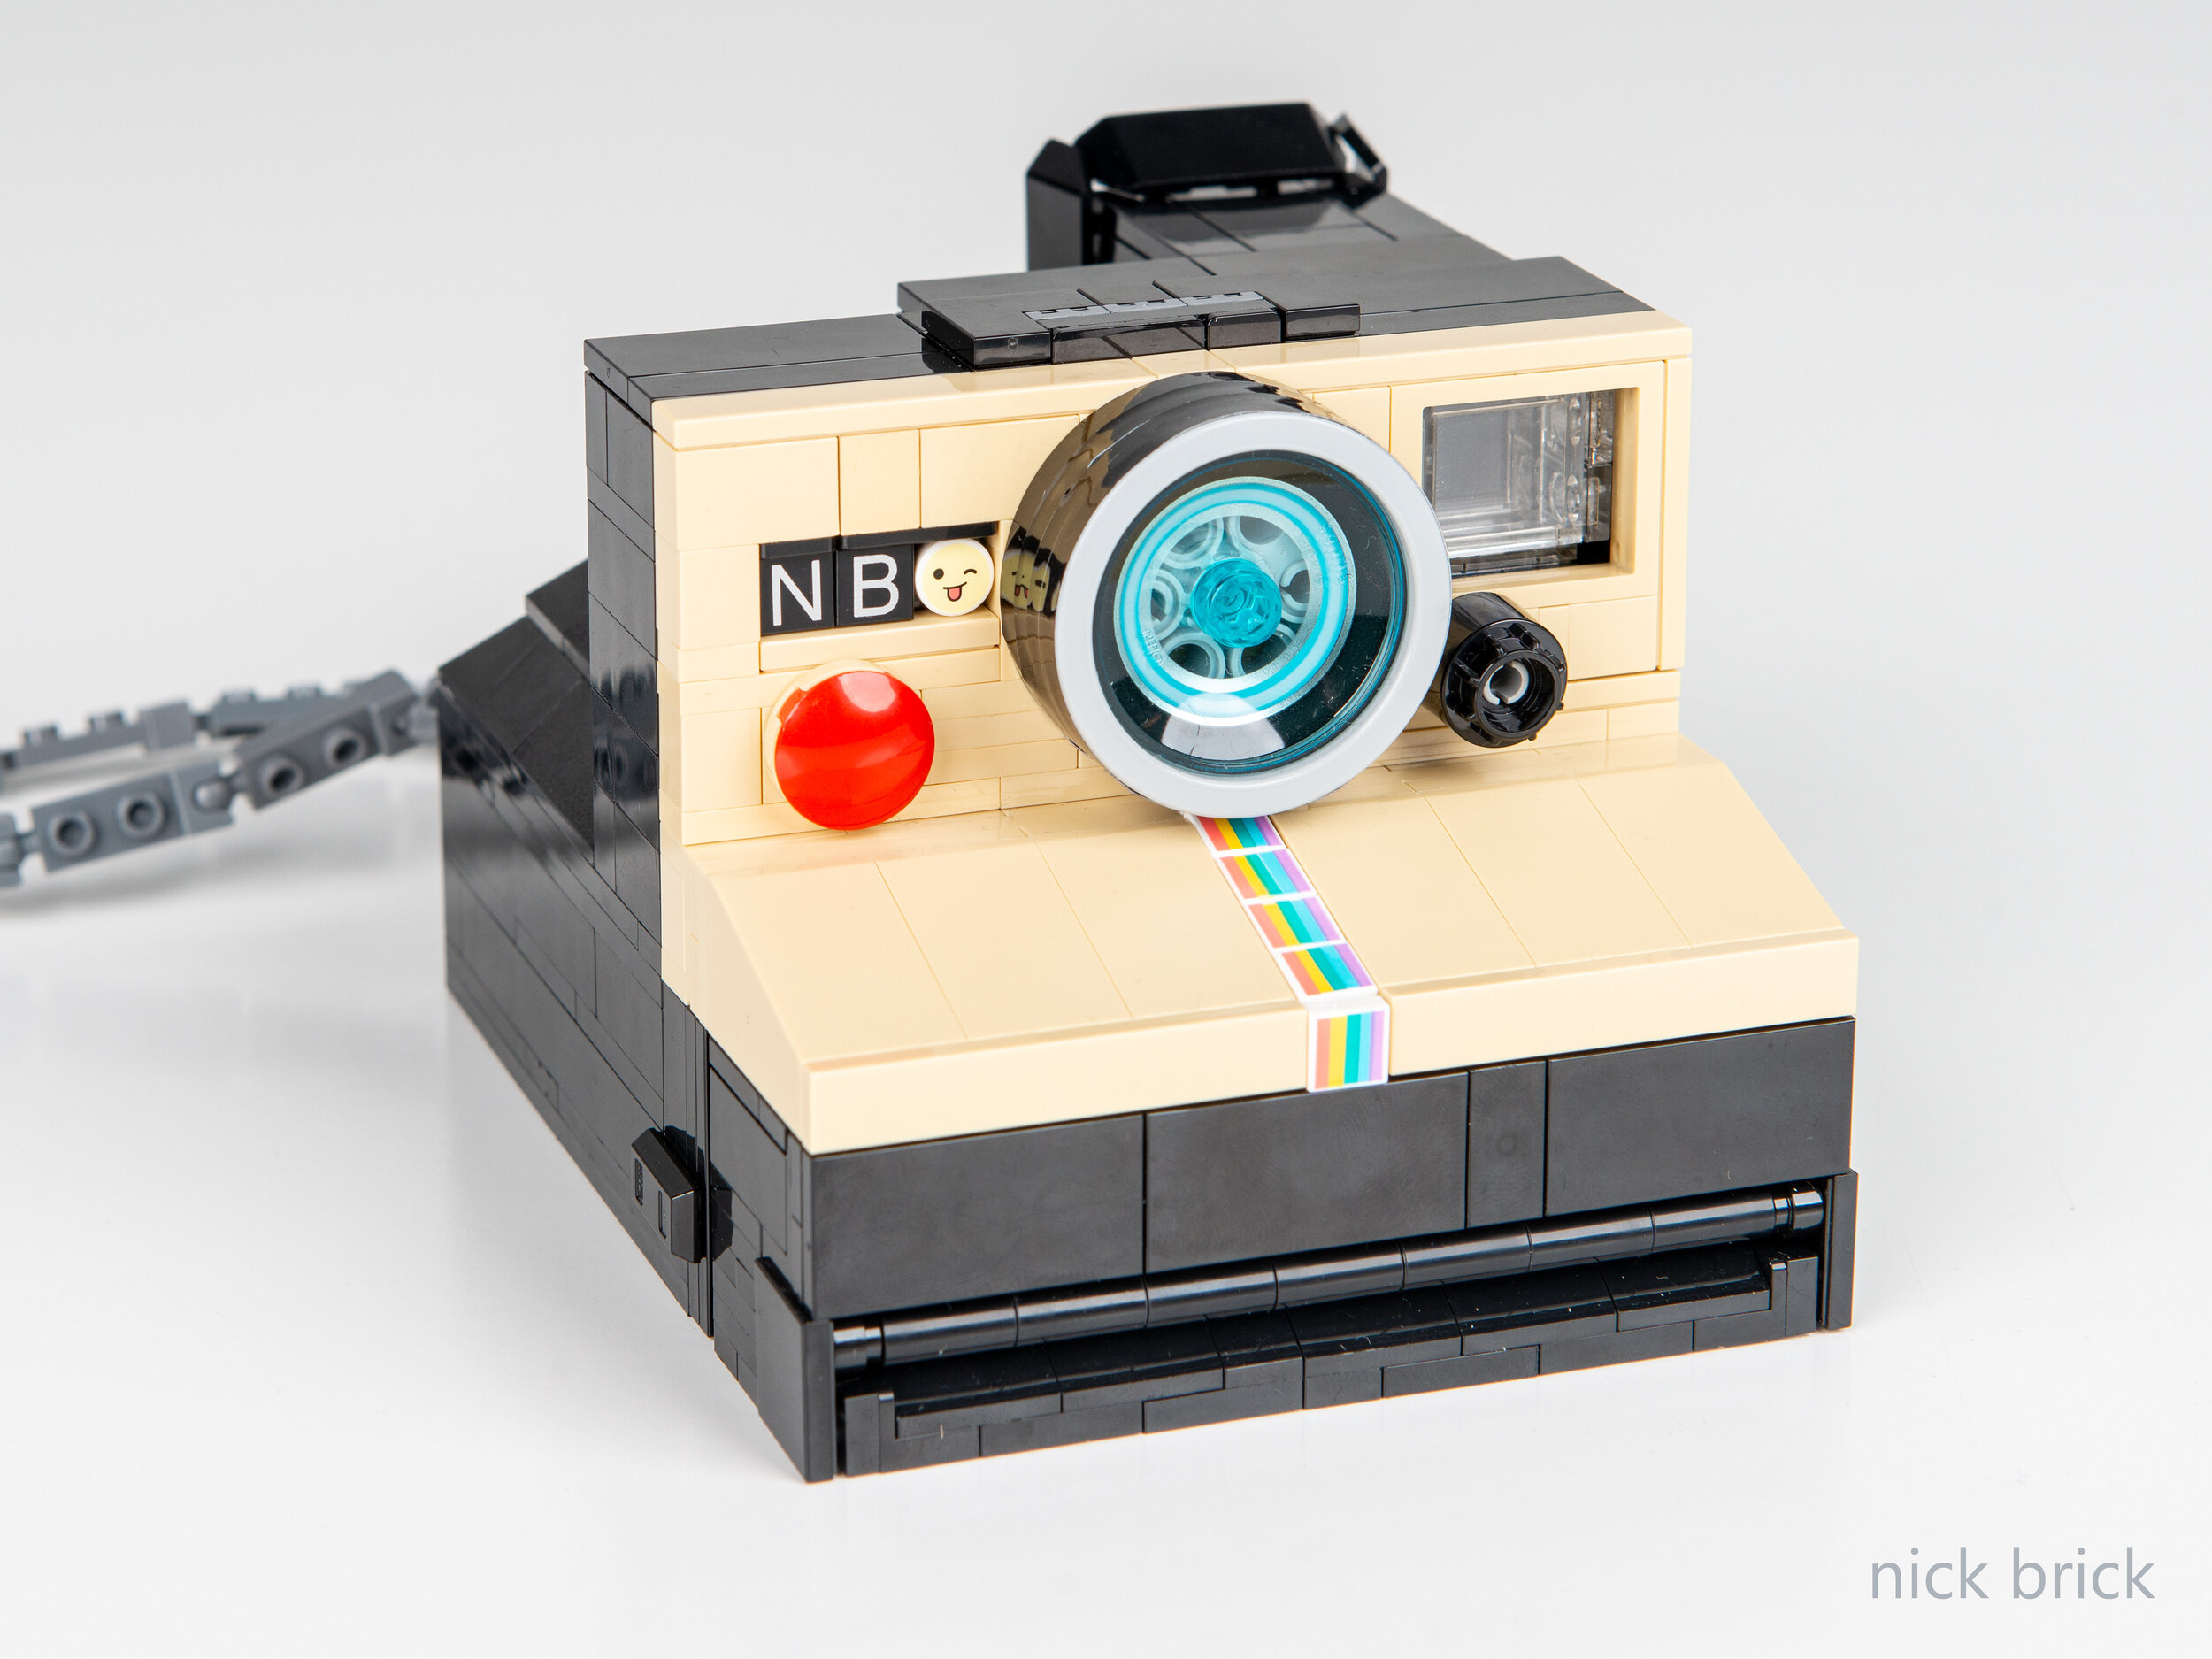 Instructions to Build a LEGO Vintage Camera - BrickNerd - All